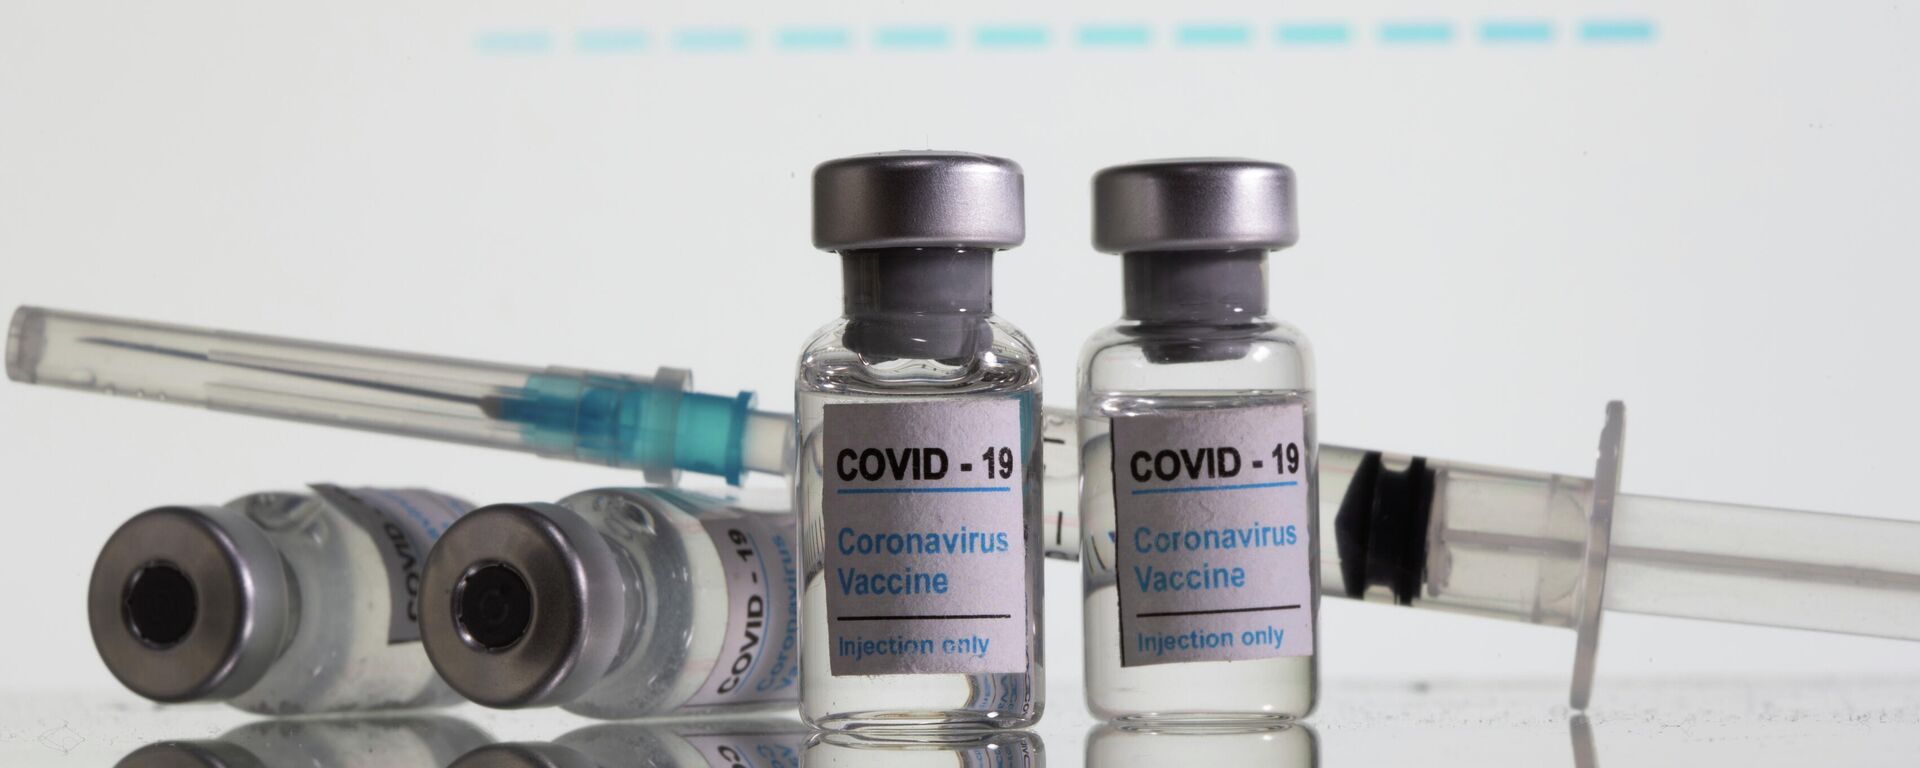 Viales de vacuna de Moderna contra el COVID-19 - Sputnik Mundo, 1920, 05.03.2021